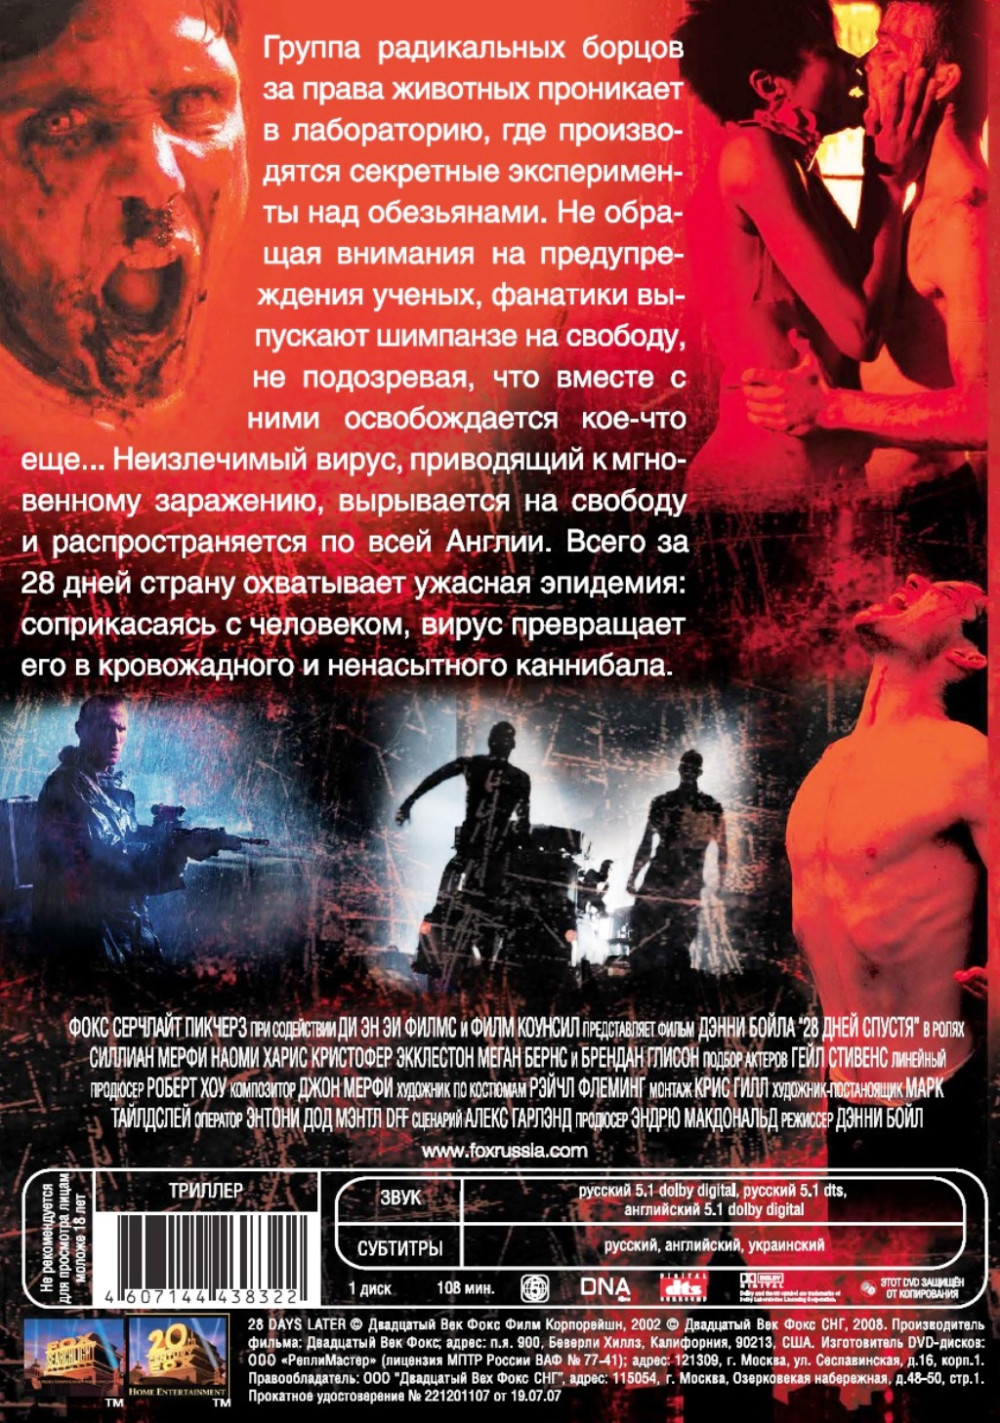 28   (DVD)